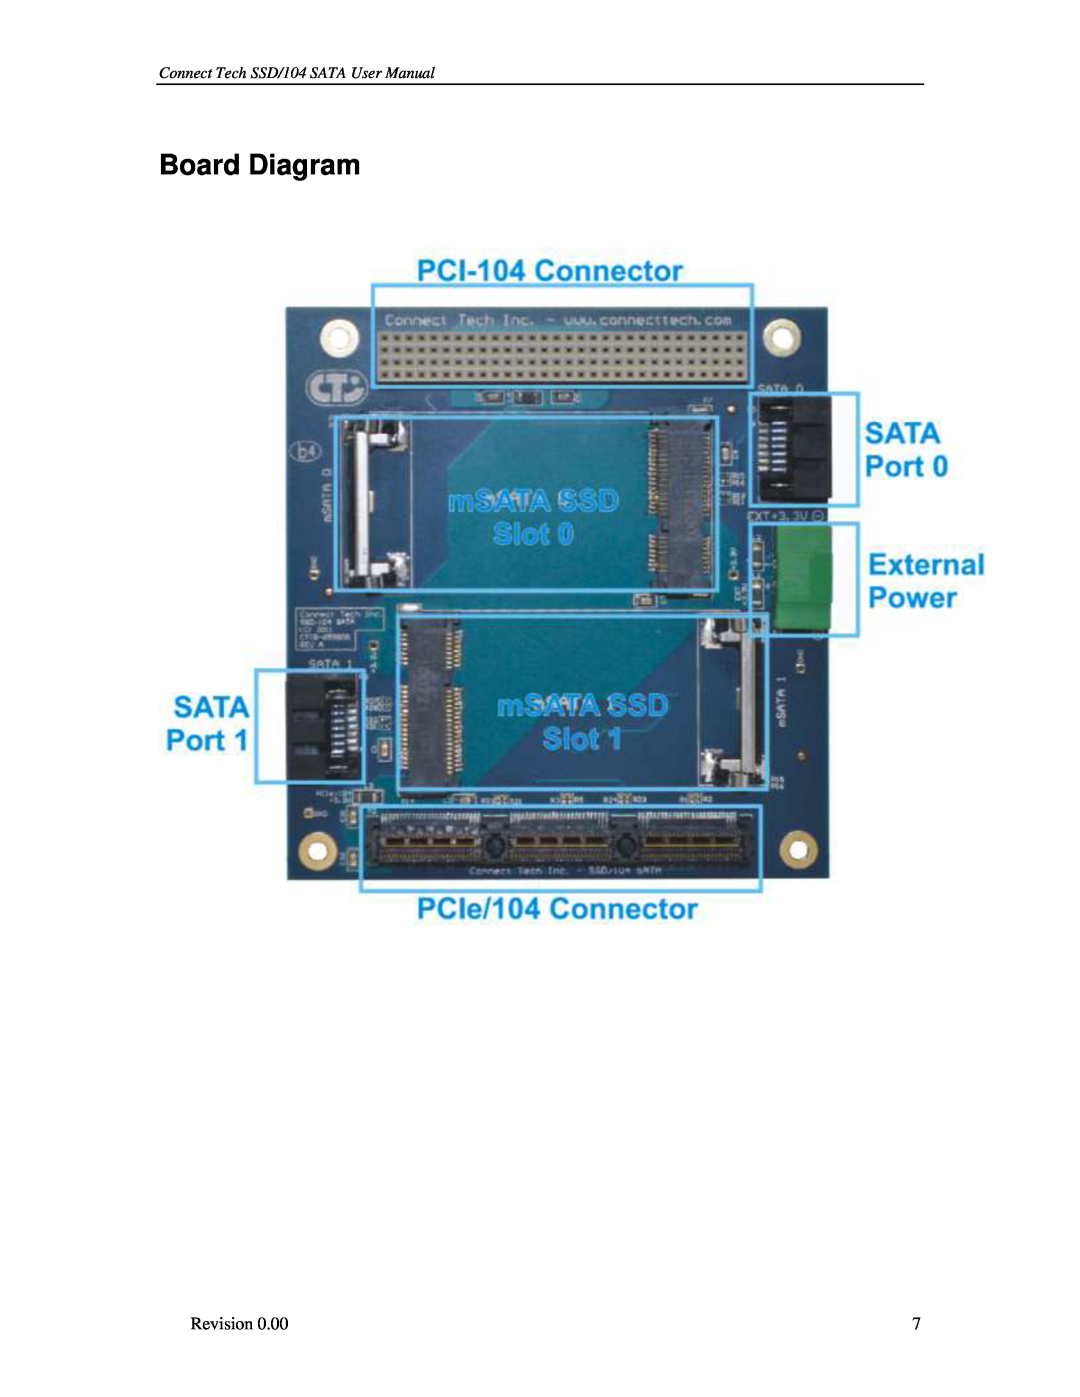 Connect Tech SSD/104 user manual Board Diagram, Revision 